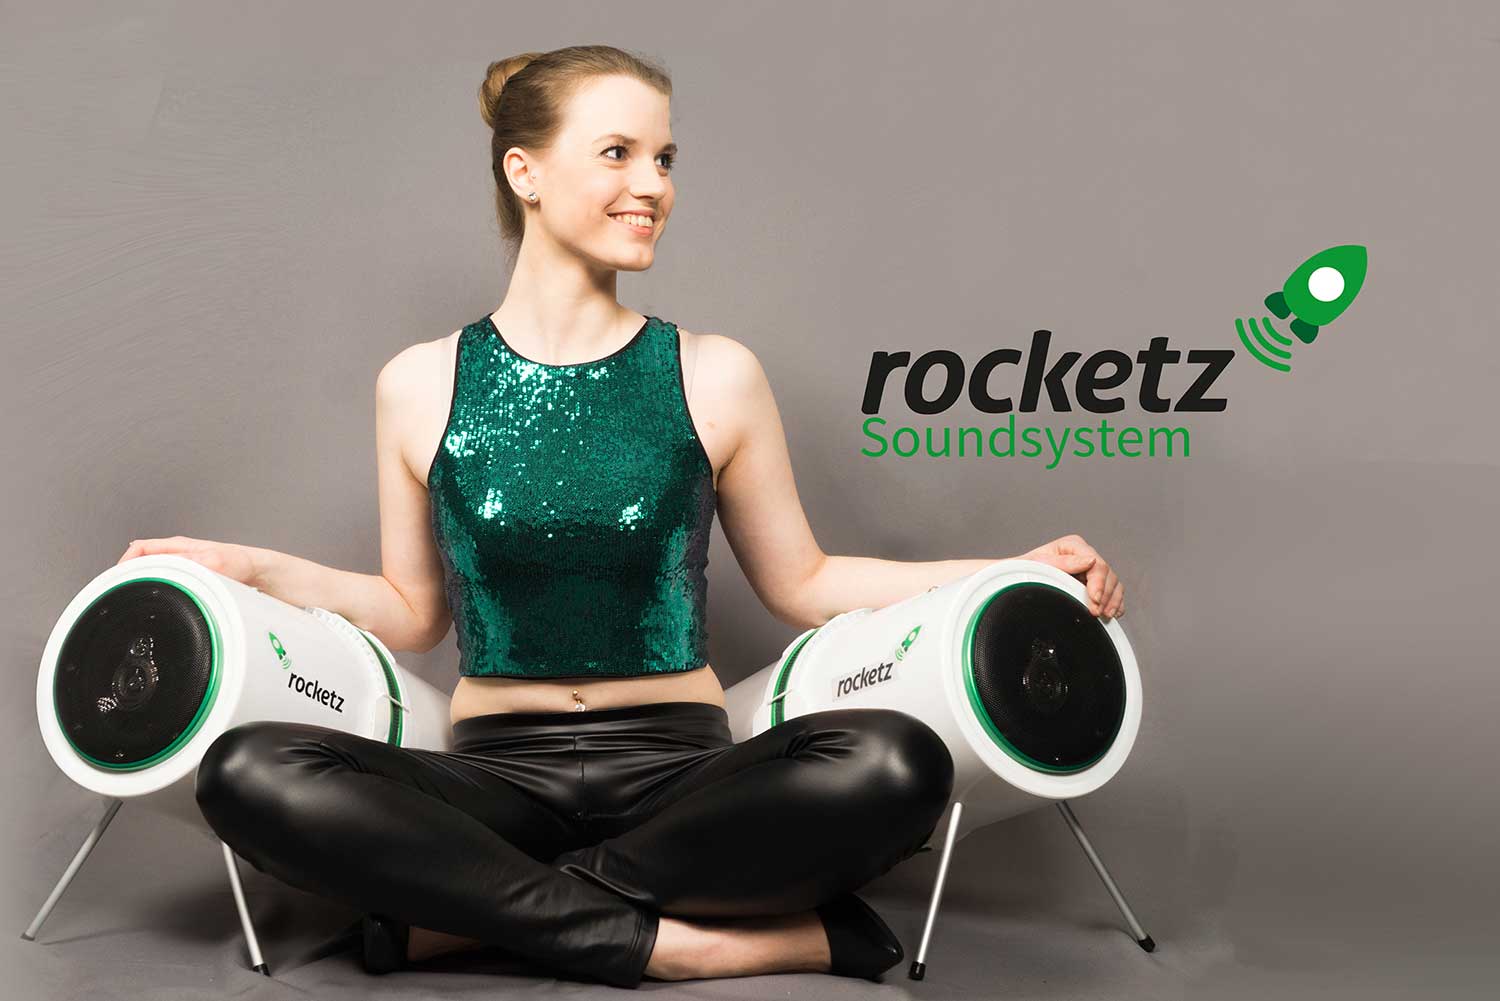 Das Rocketz Soundsystem